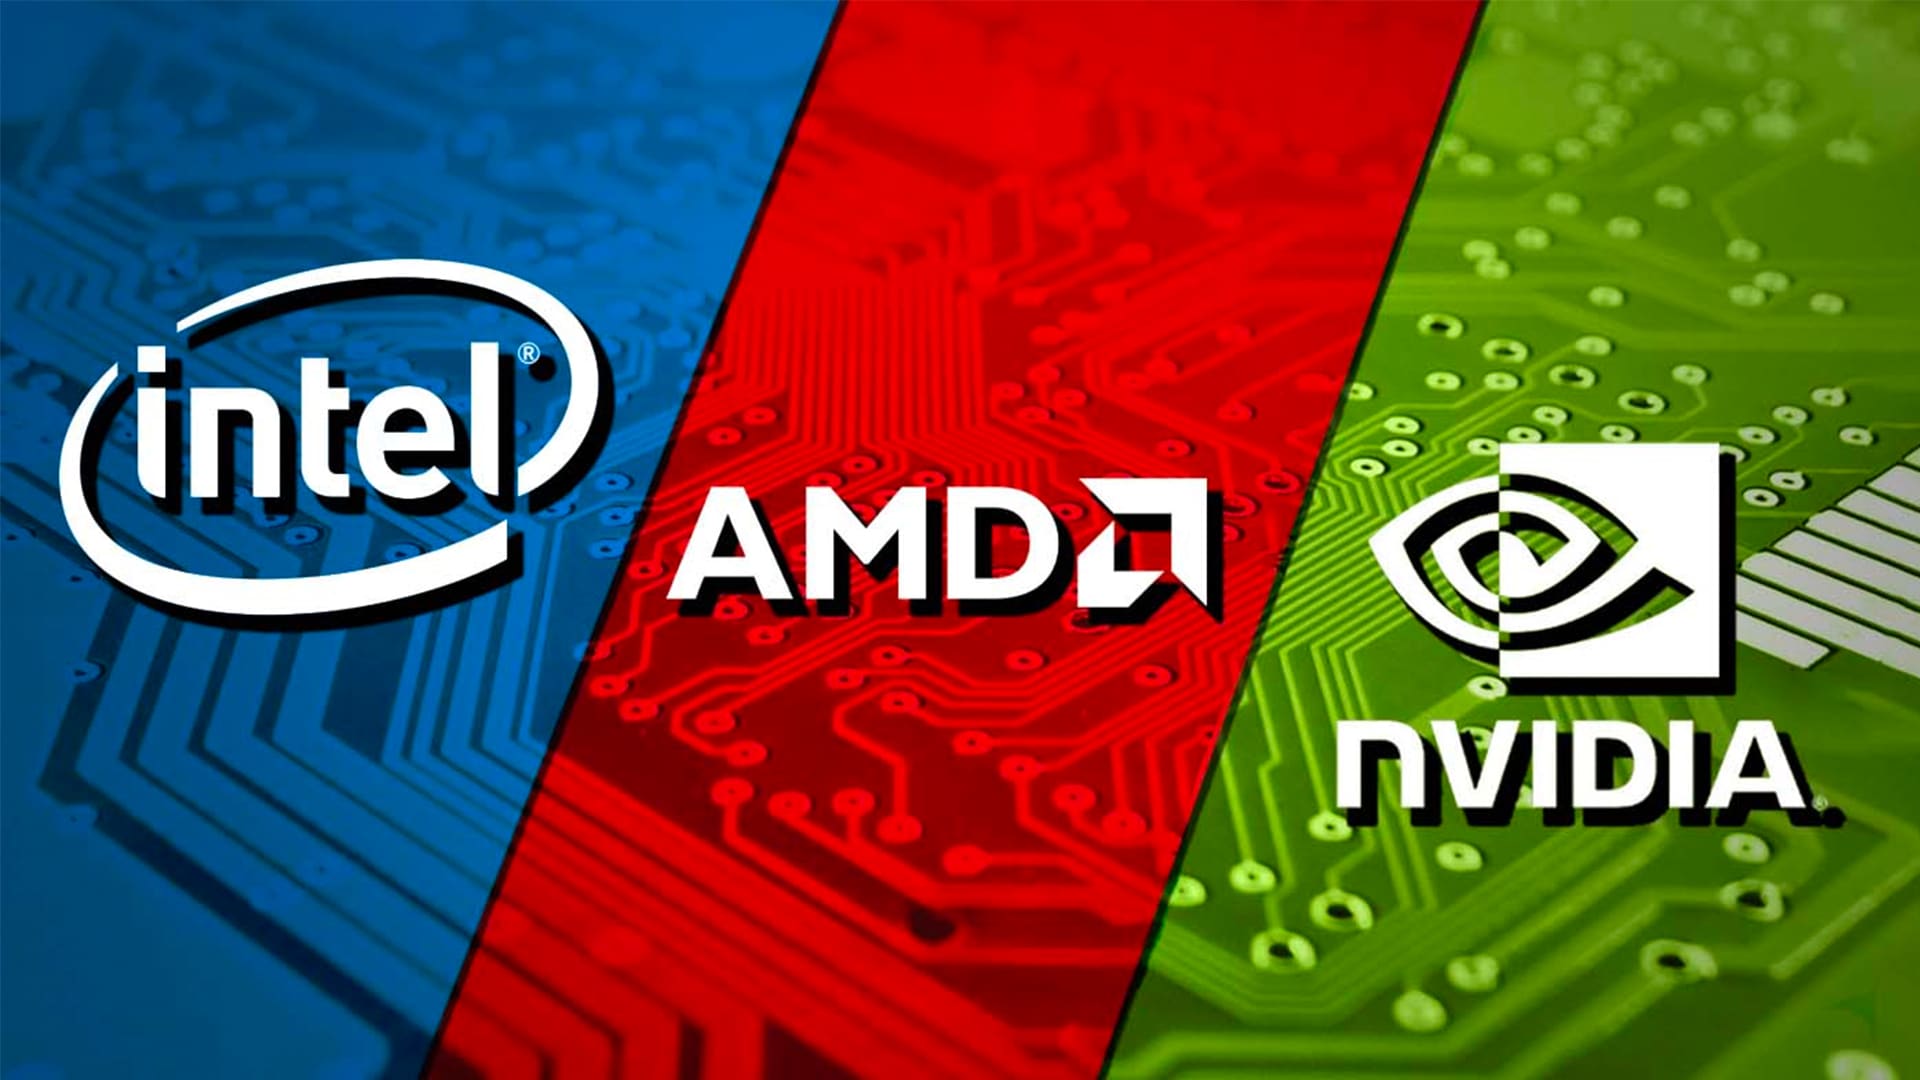 AMD، مانند اینتل، امیدوار است تعداد زیادی تراشه هوش مصنوعی بفروشد، اما انتظار دارد درآمد آن ضربه بخورد.